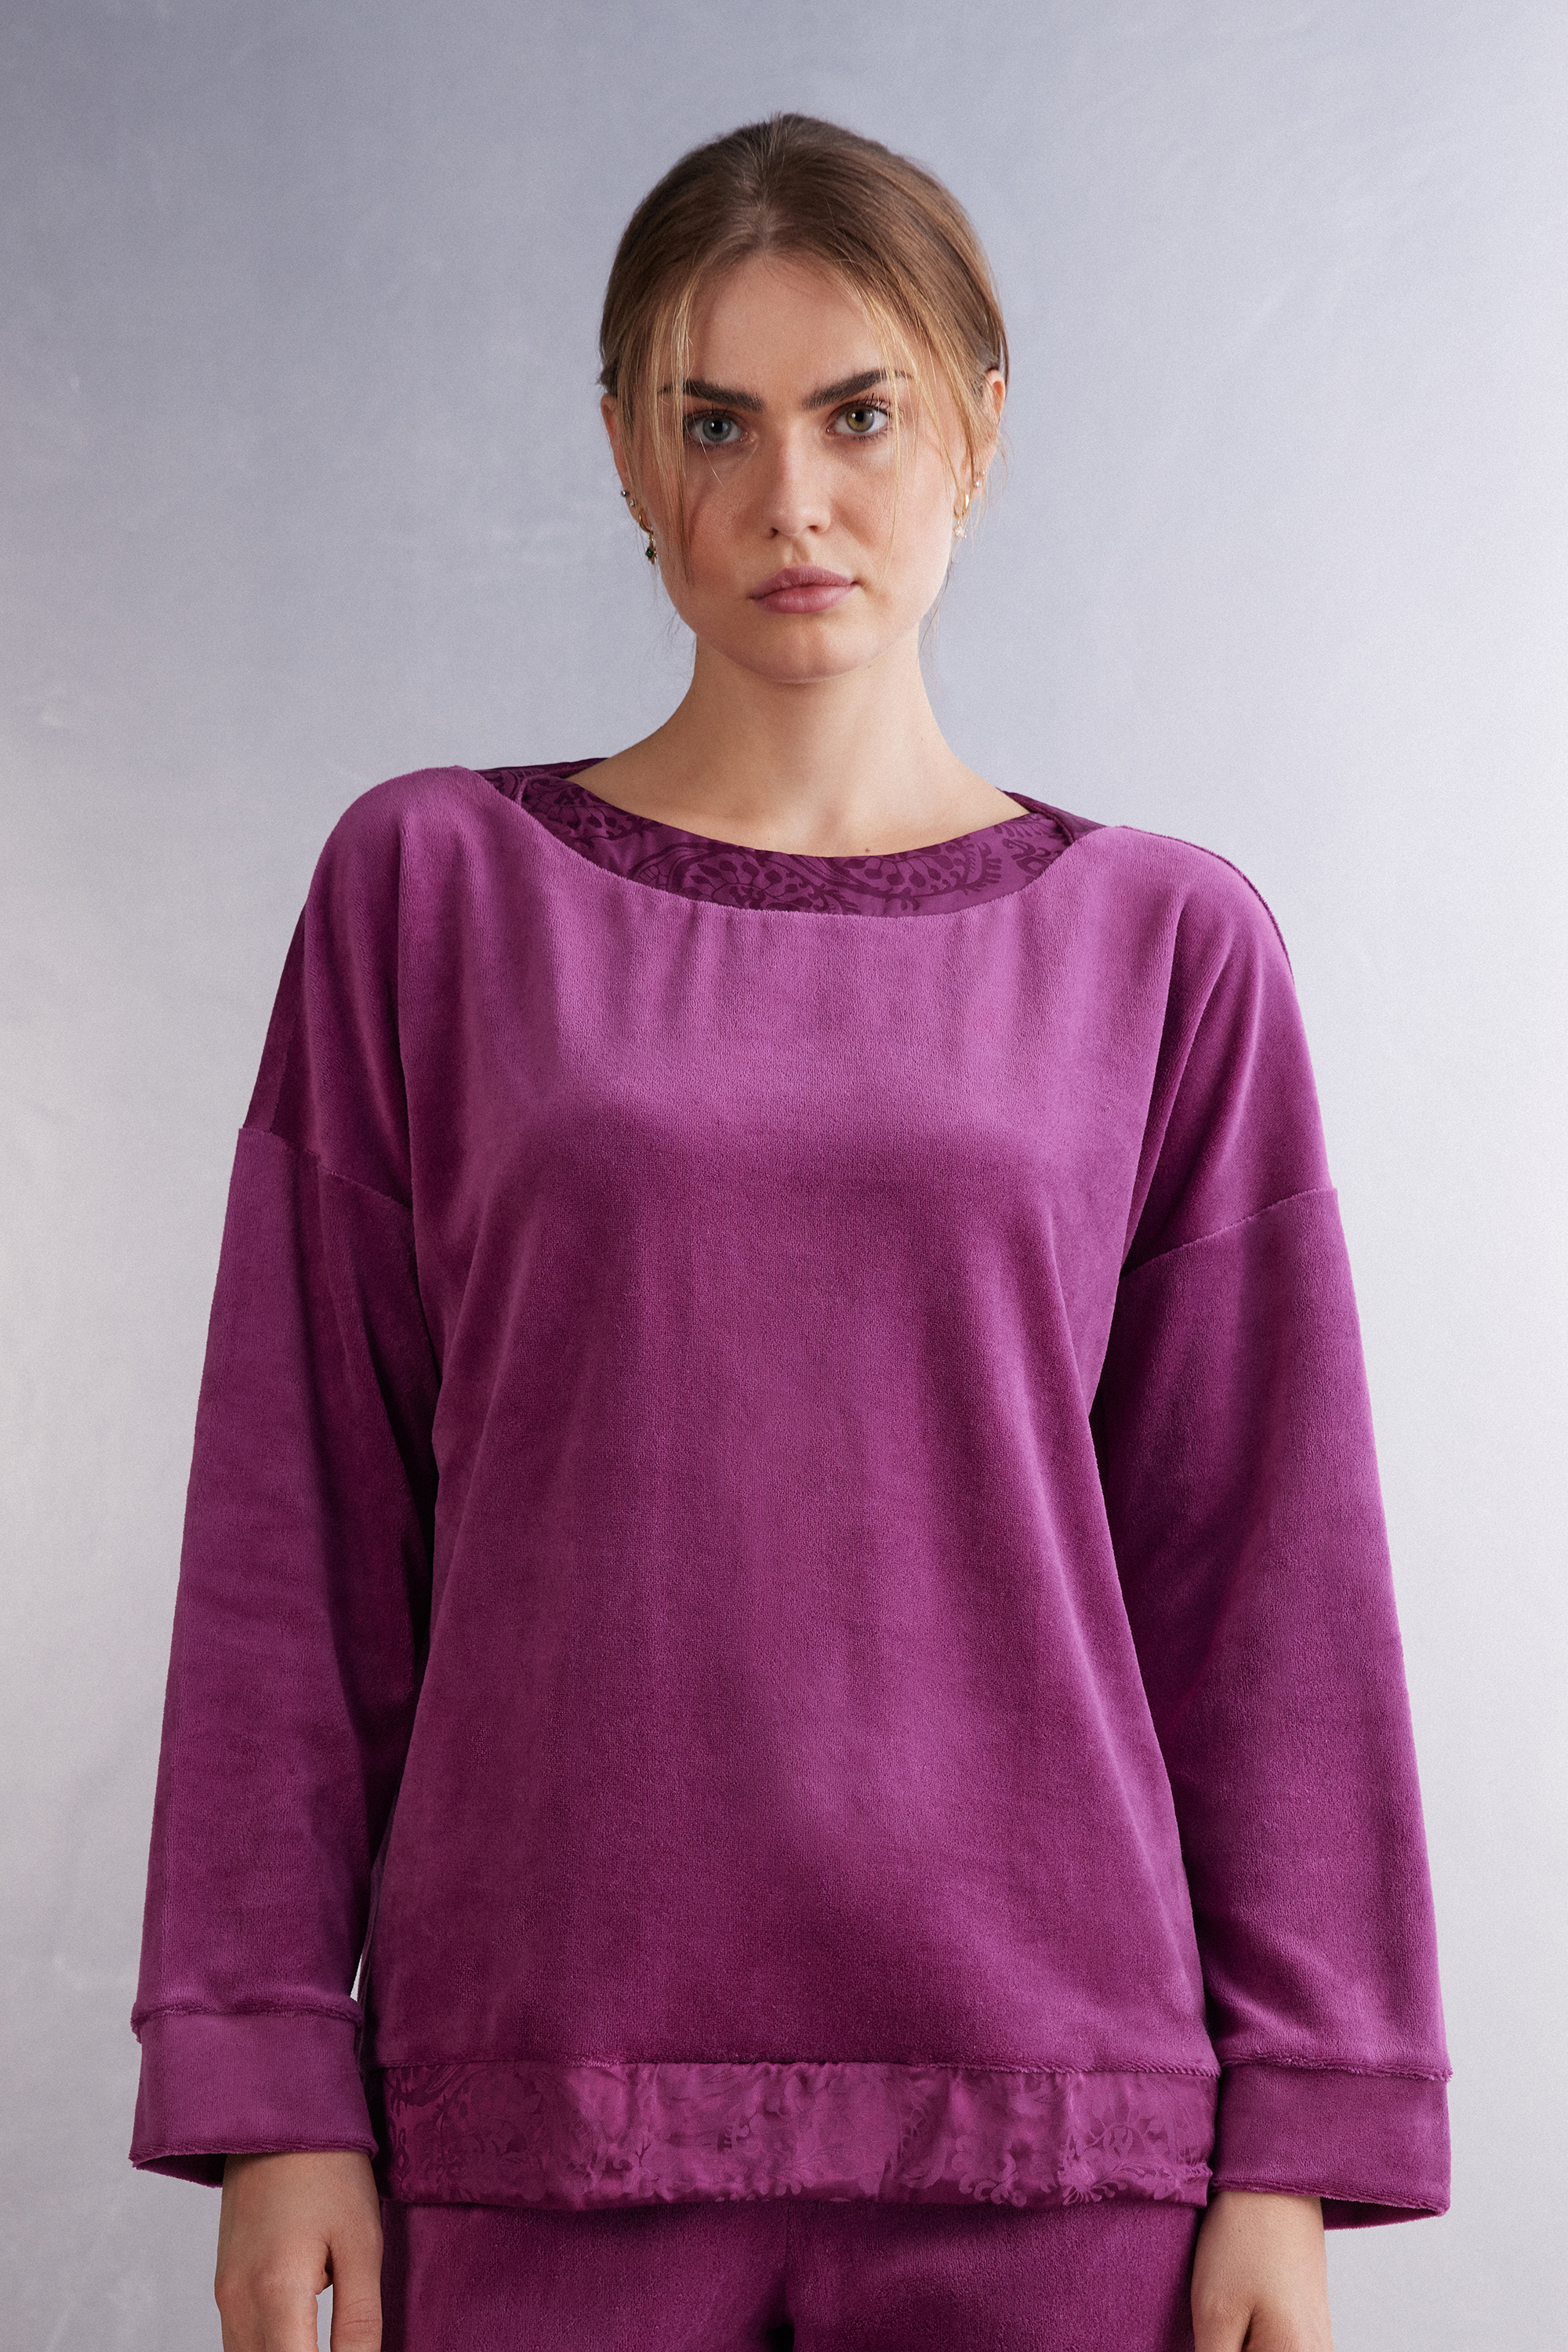 Intimissimi Velvet Paisley Long Sleeve Top in Satin Jacquard Woman Violet Size M